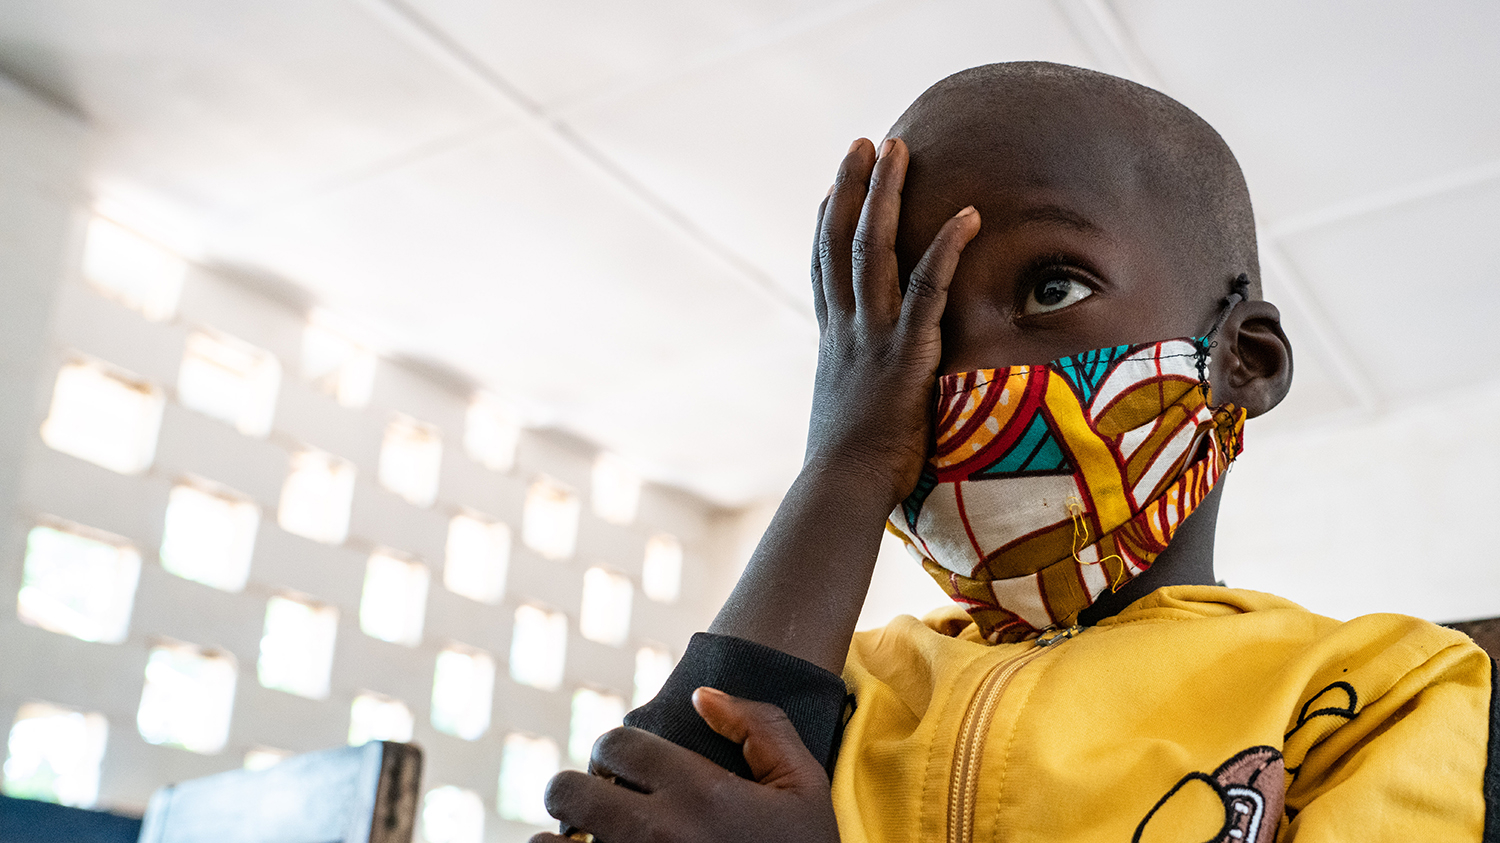 En gutt med en fargesterk maske holder en hånd over det ene øyet under en synsprøve.